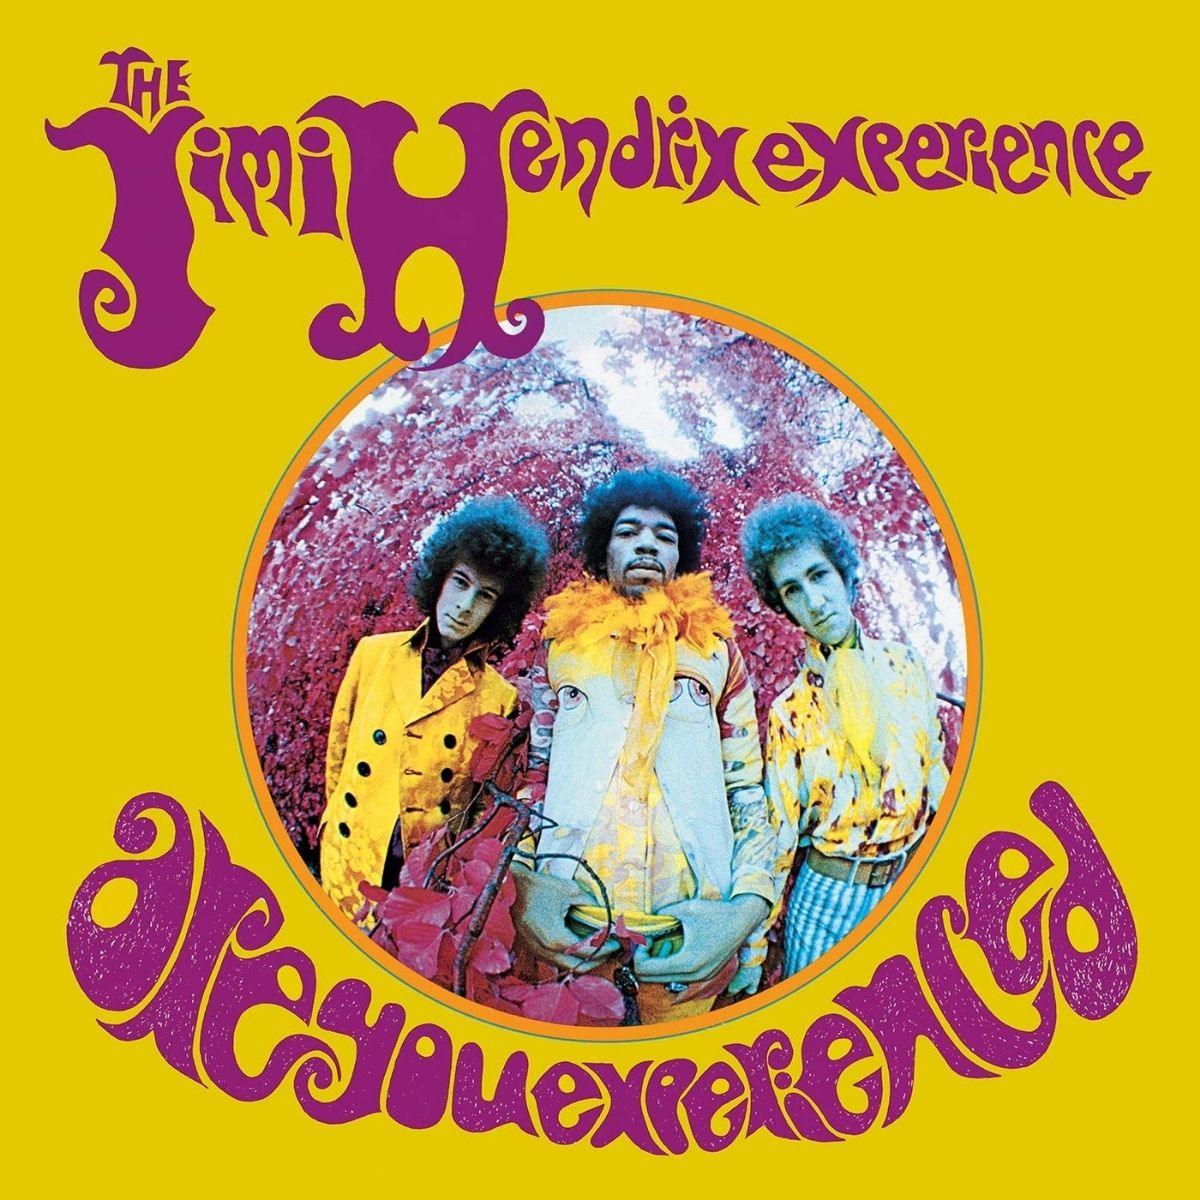 Jimi Hendrix album cover "Are You Experience" (1967)